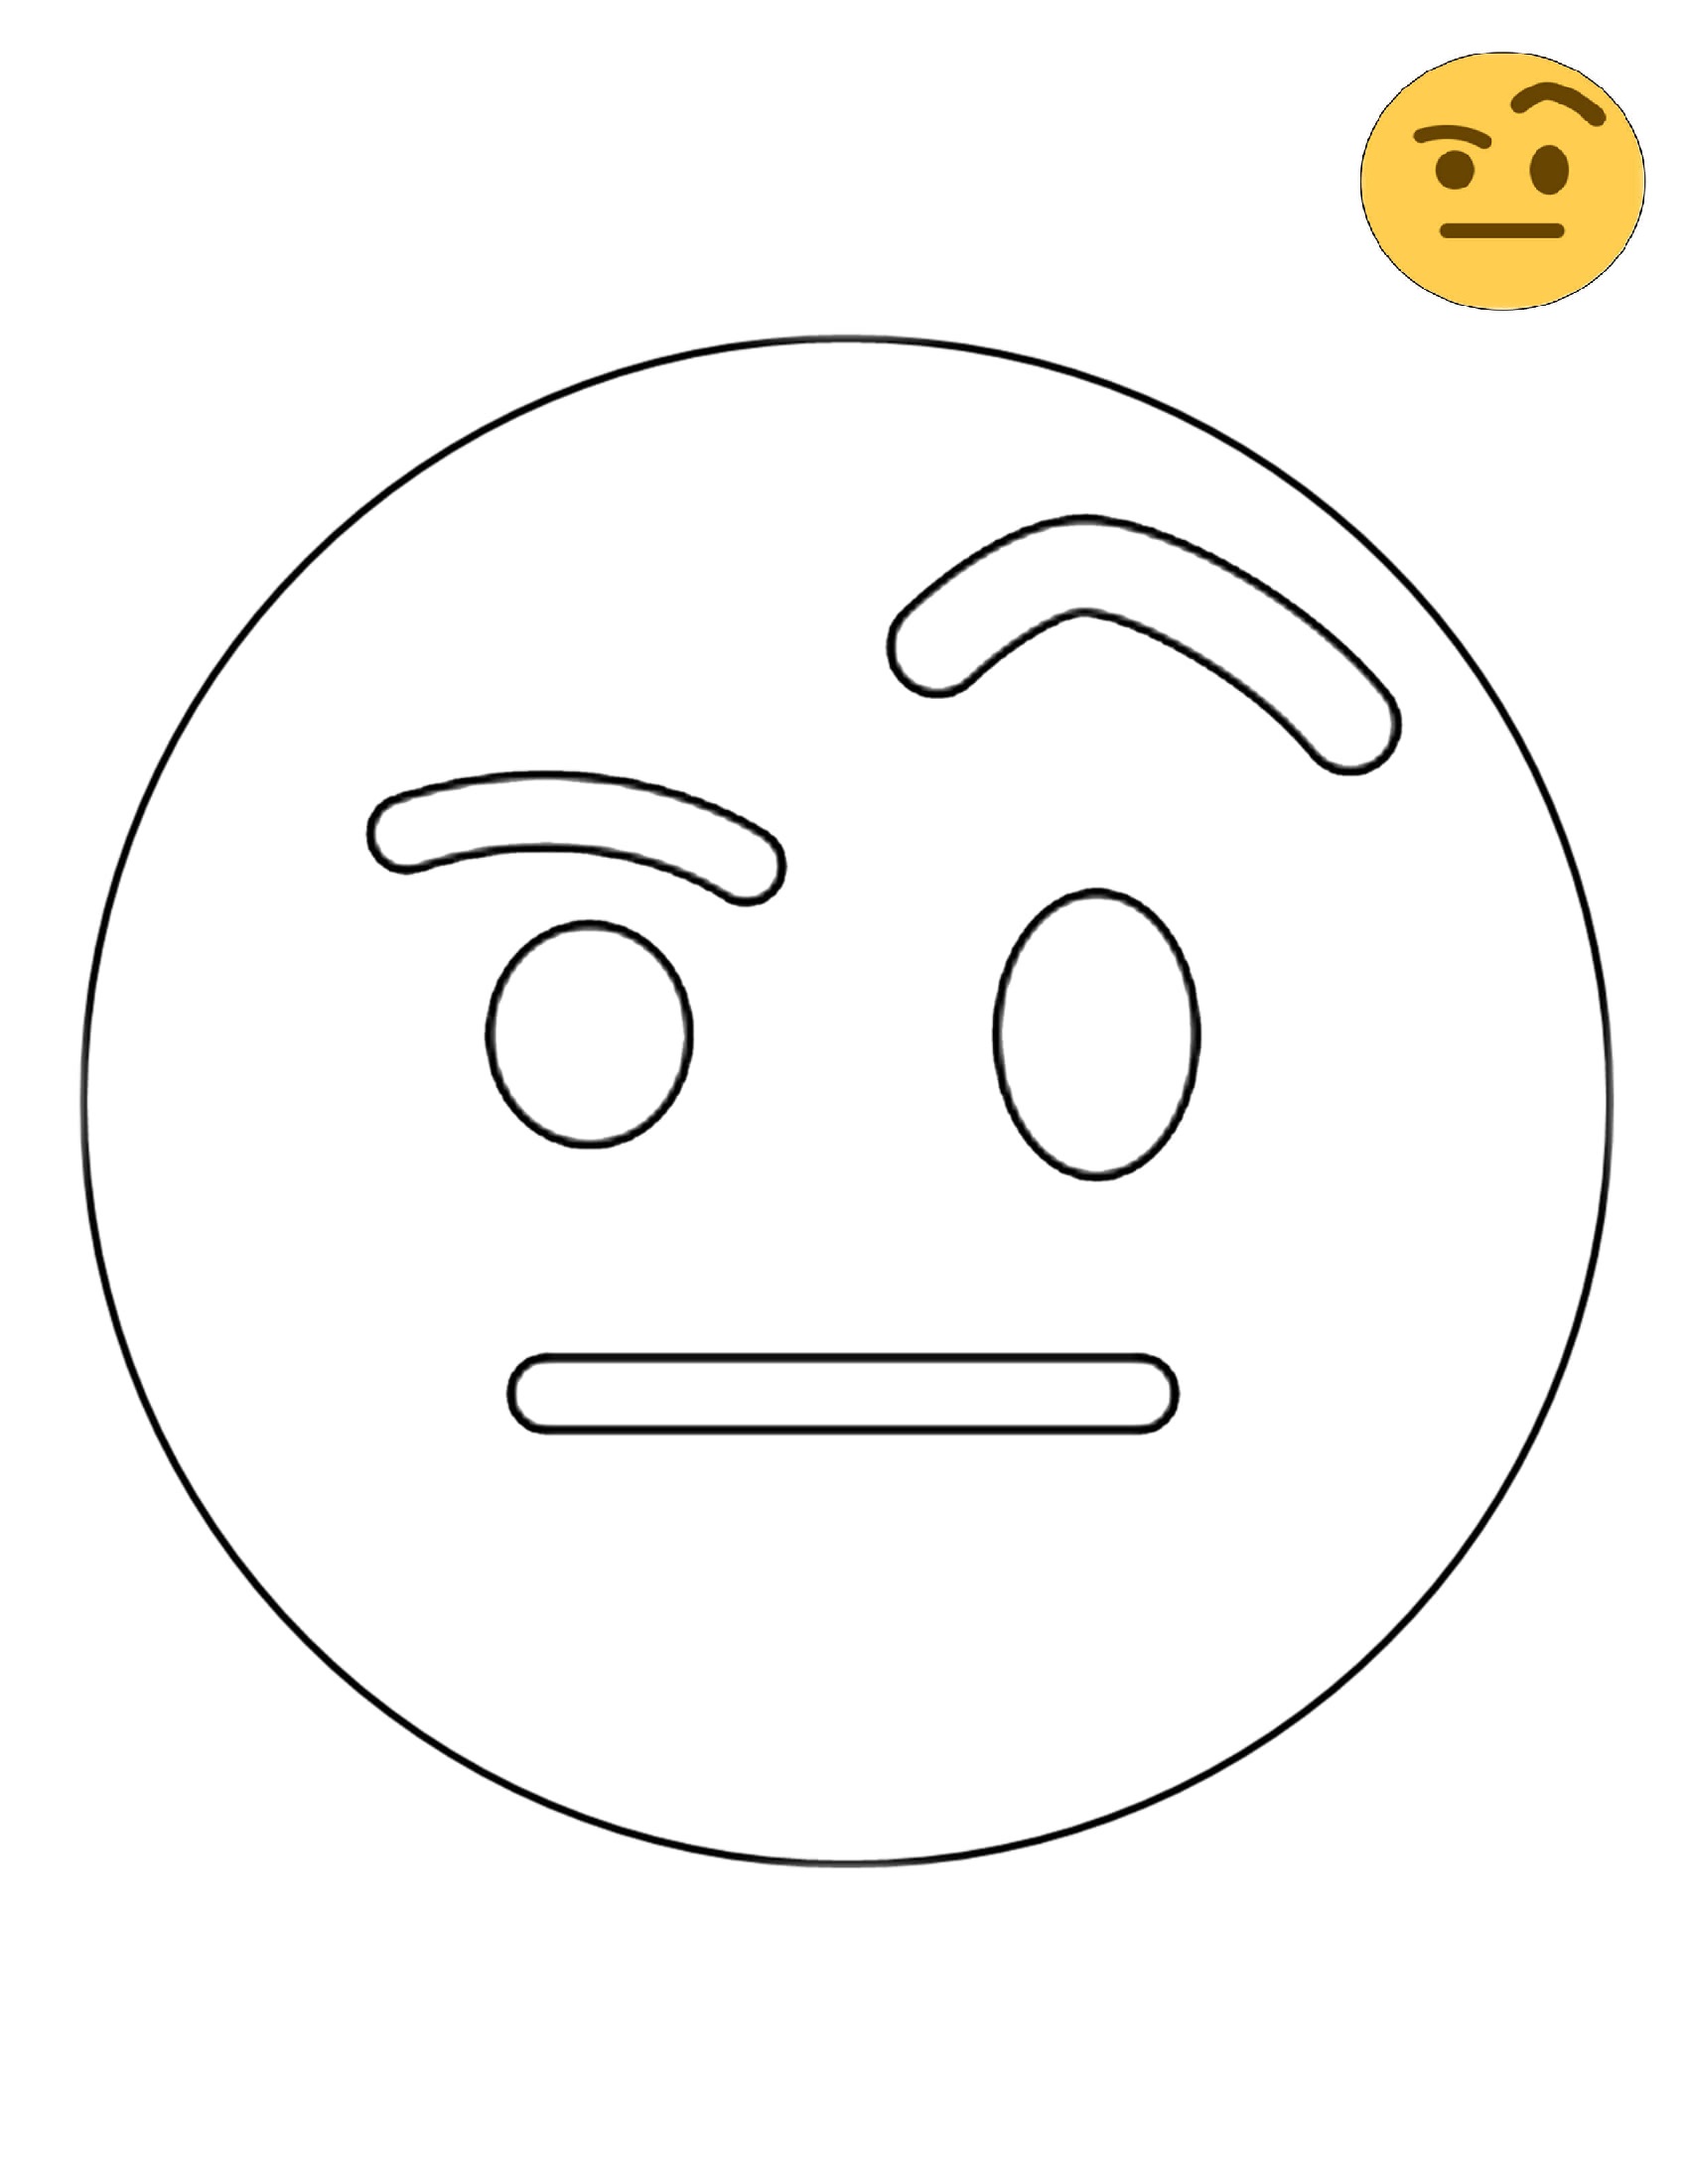 Twitter Raised Eyebrow Emoji Coloring Page